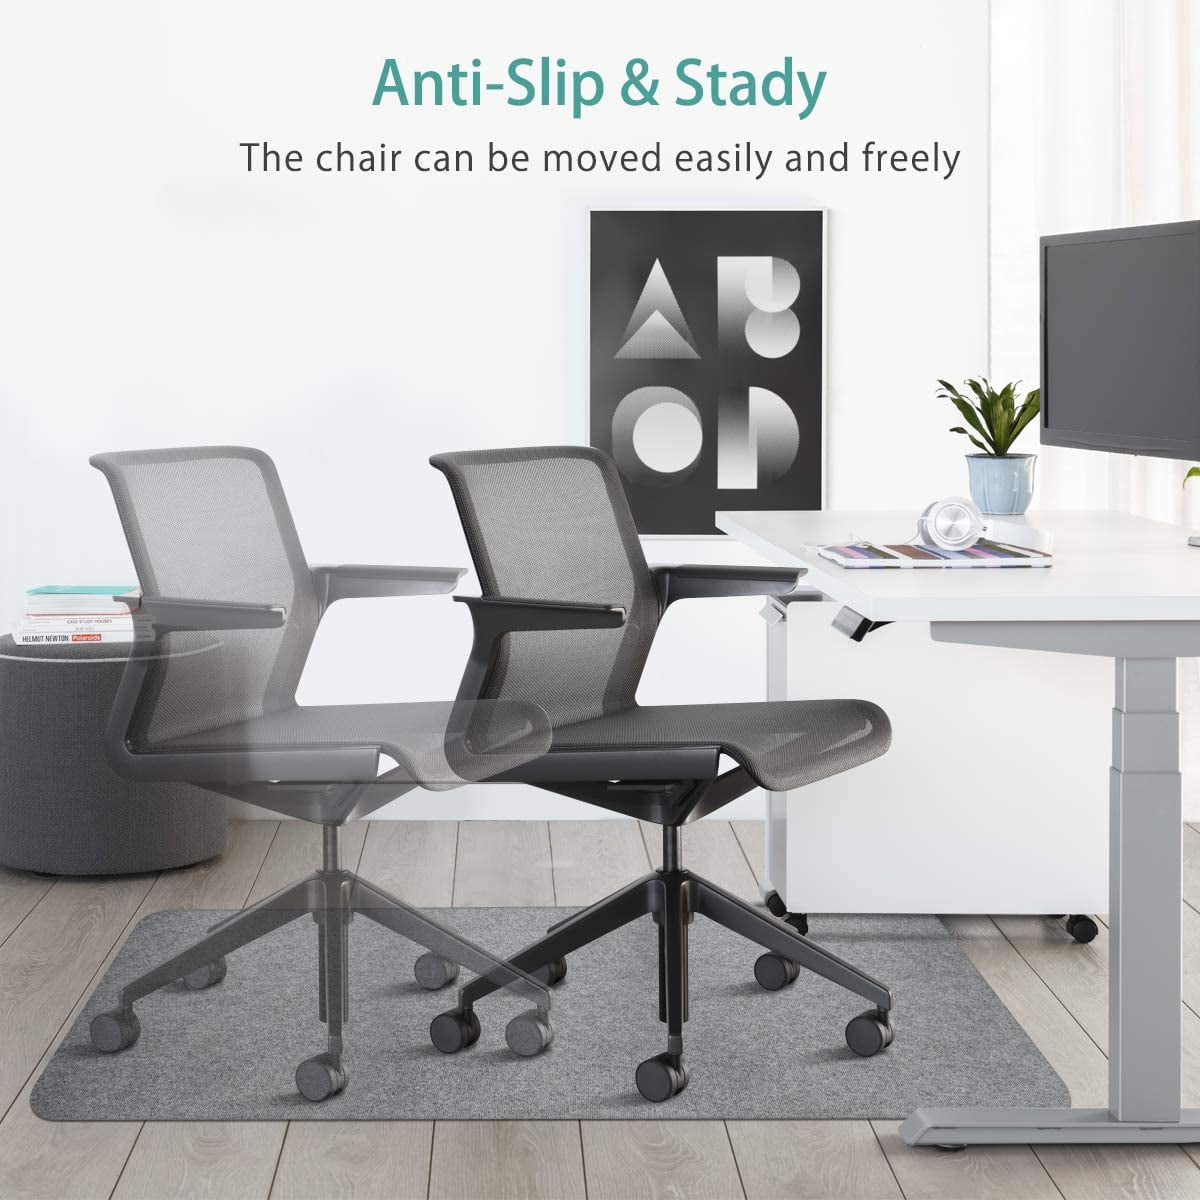 Winado Office Chair Mat for Hard Floor, Rolling Chairs Desk Mat  906148573744 - The Home Depot